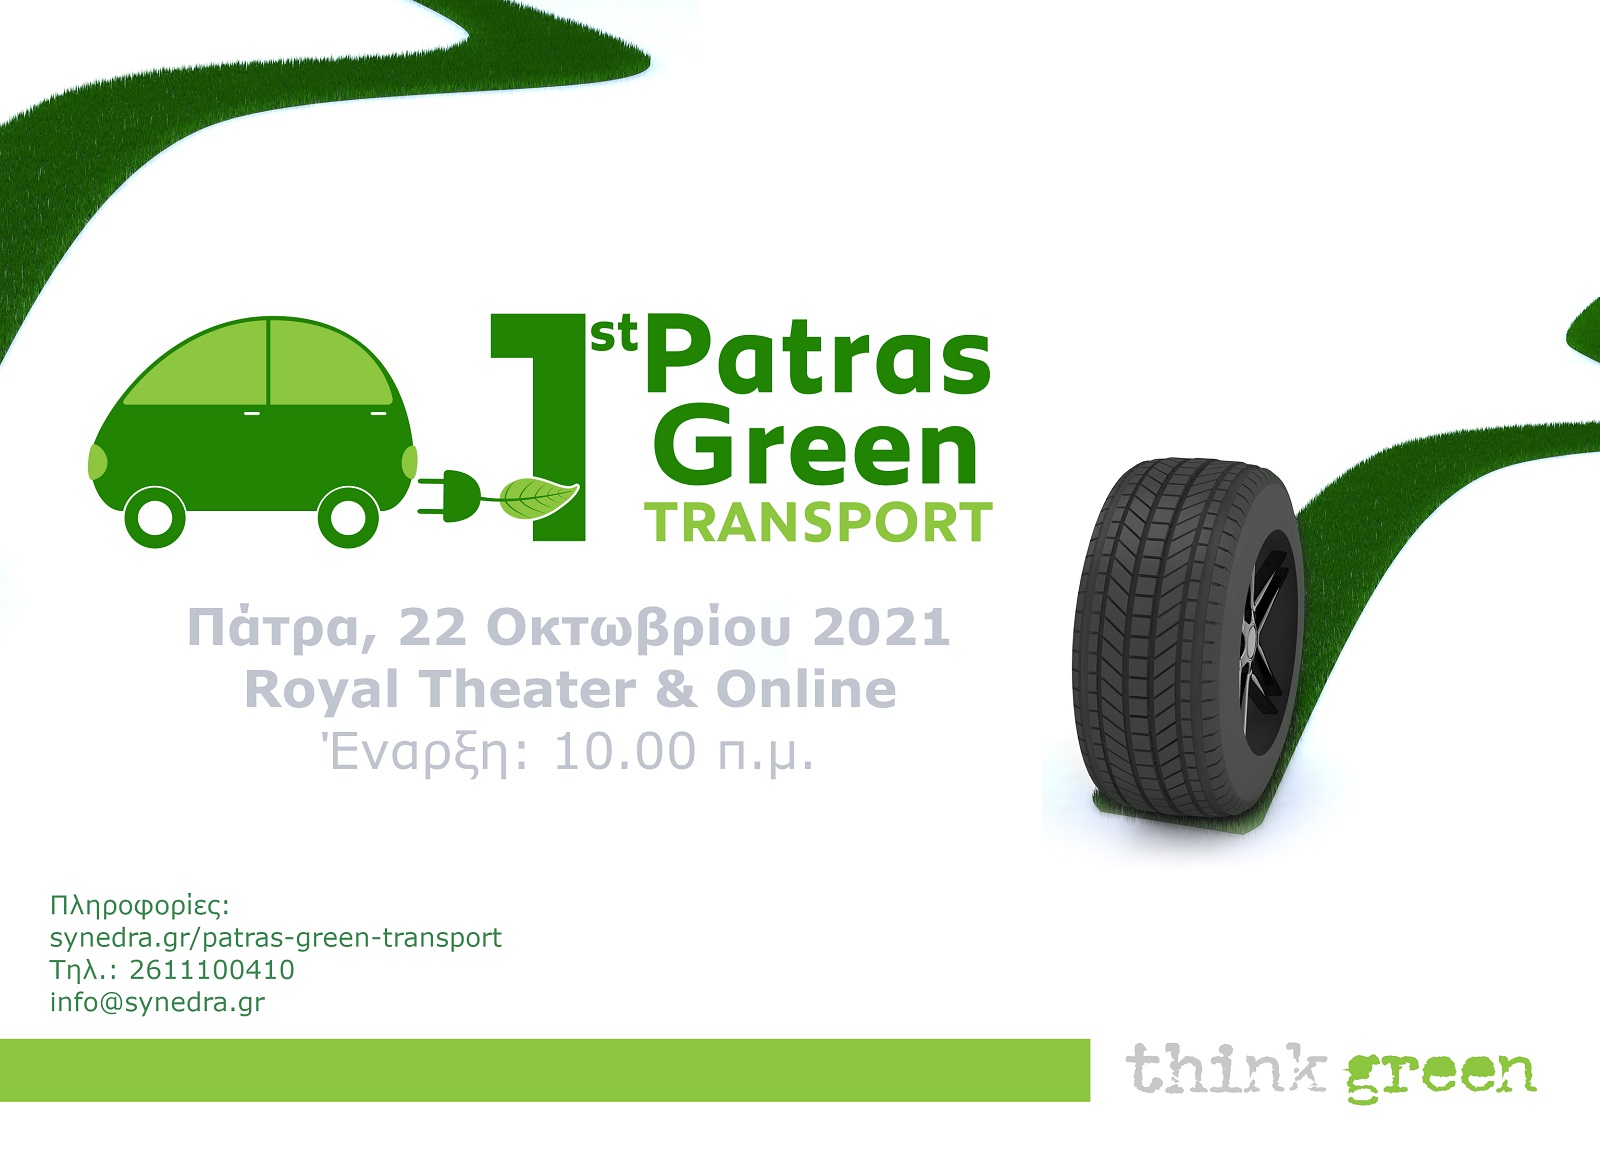 1st Patras Green Transport Conference